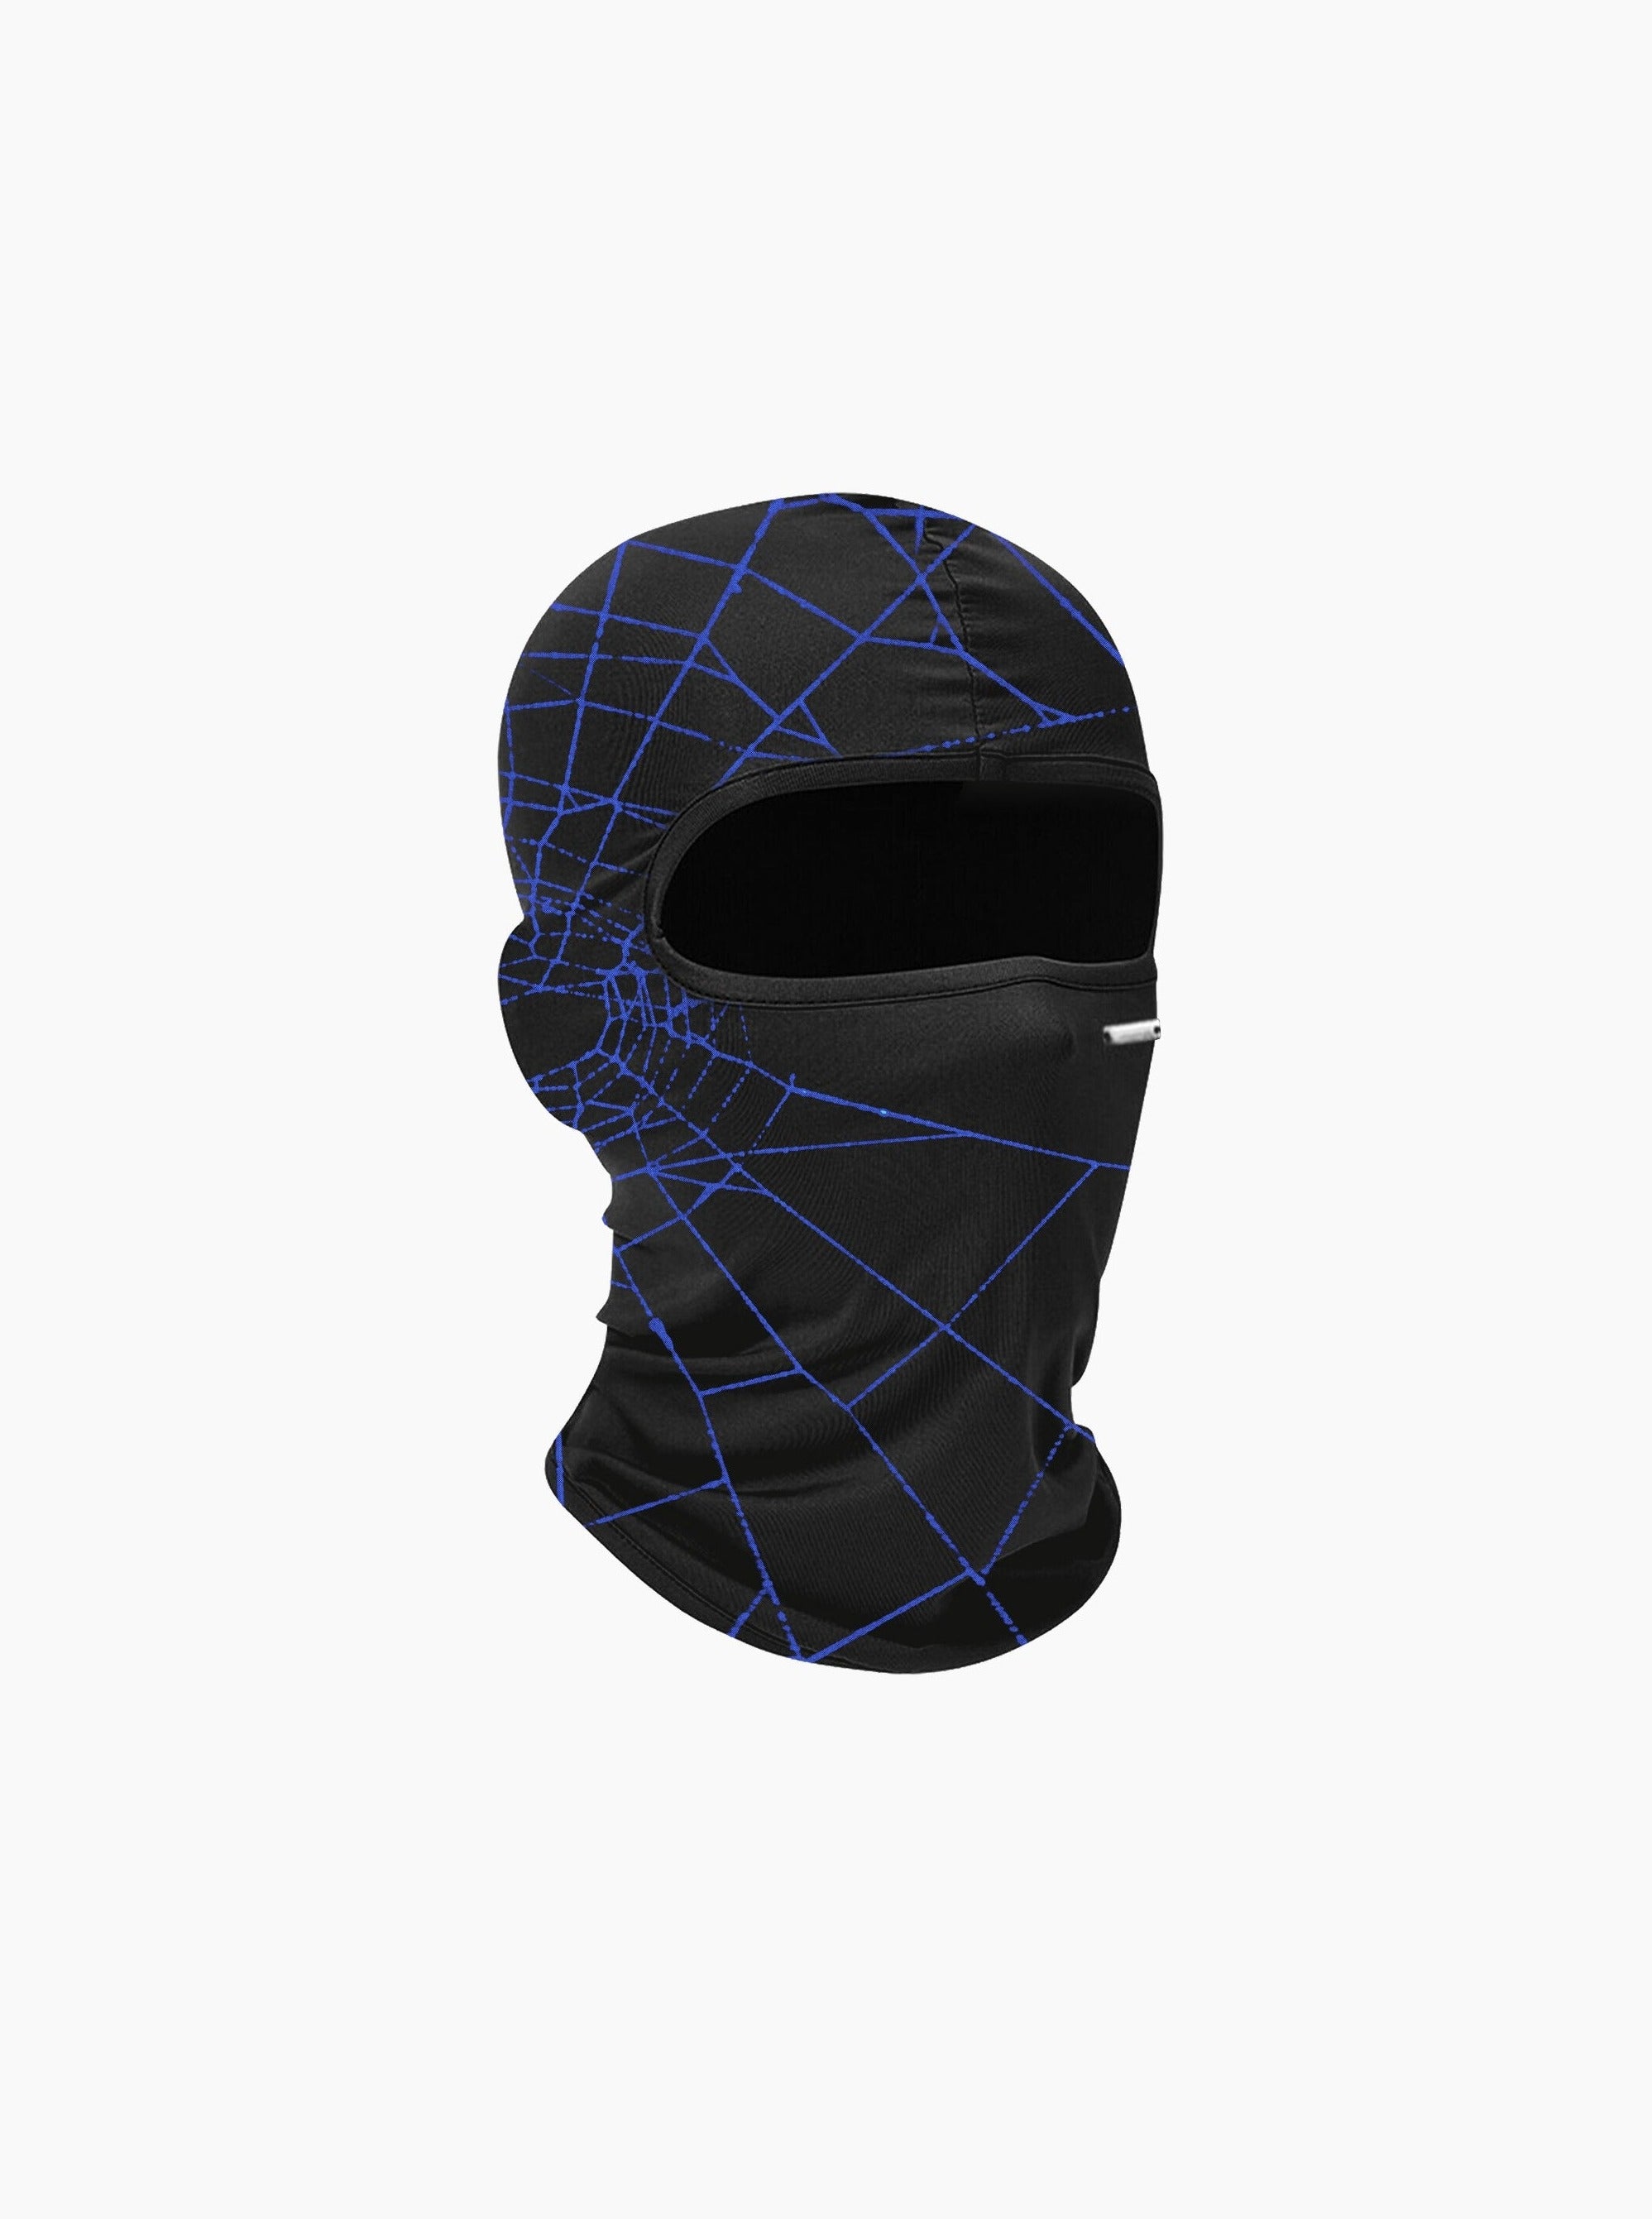 Sole et. Al Dark Web Ski Mask